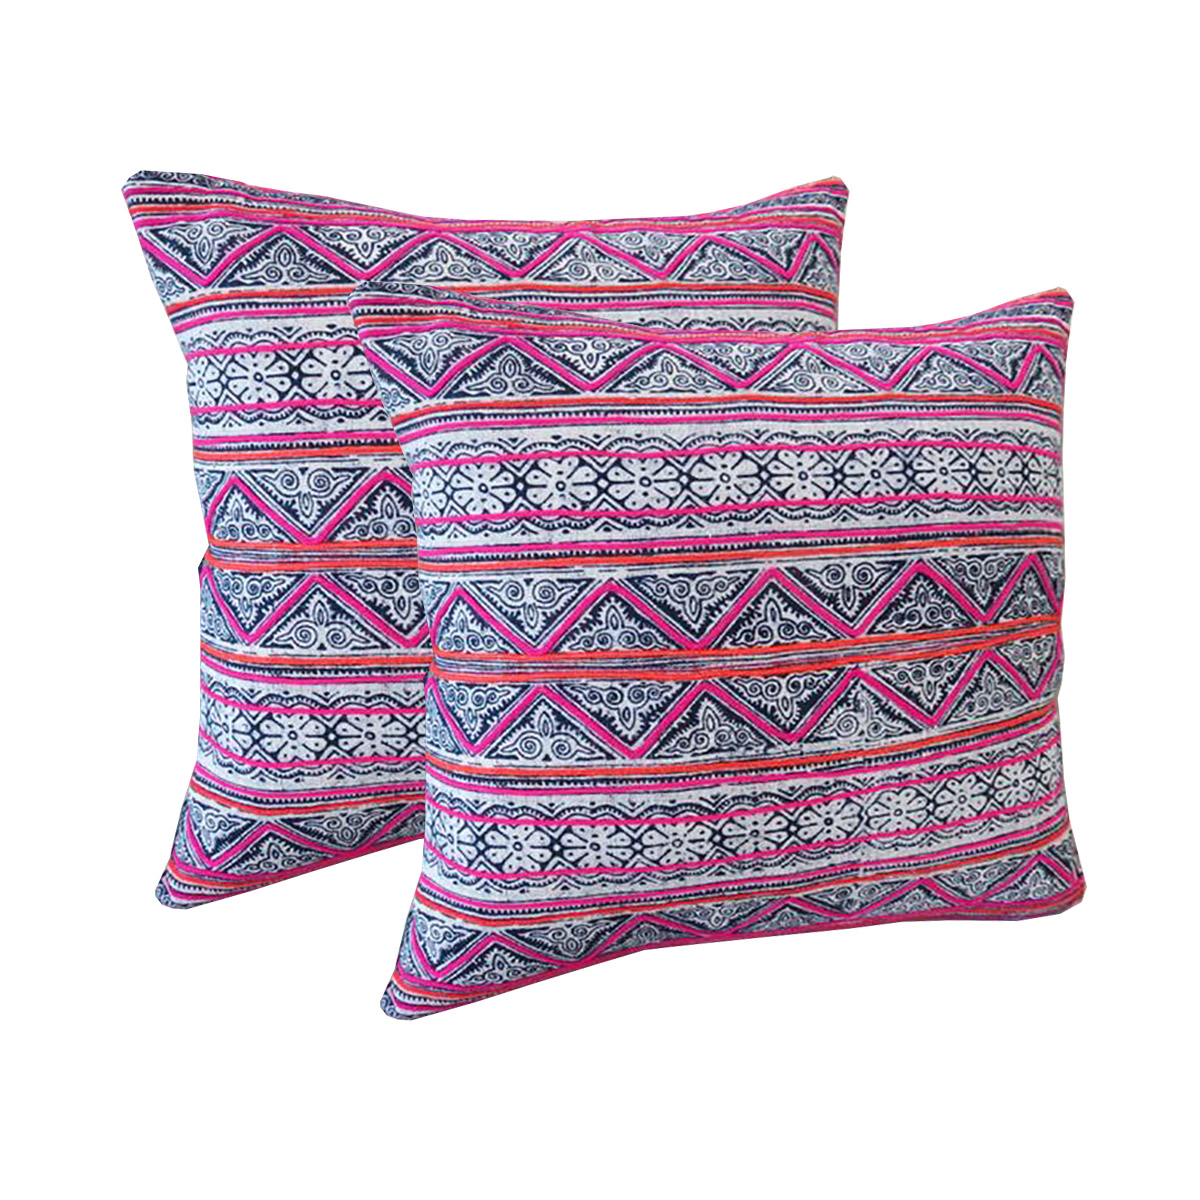 Hmong Fabric,Scatter cushions, Handmade cushions,Batik Cushions,Hmong cushion,Hmong Pillow,Pillow case,Hmong Batik Hemp cushion cover